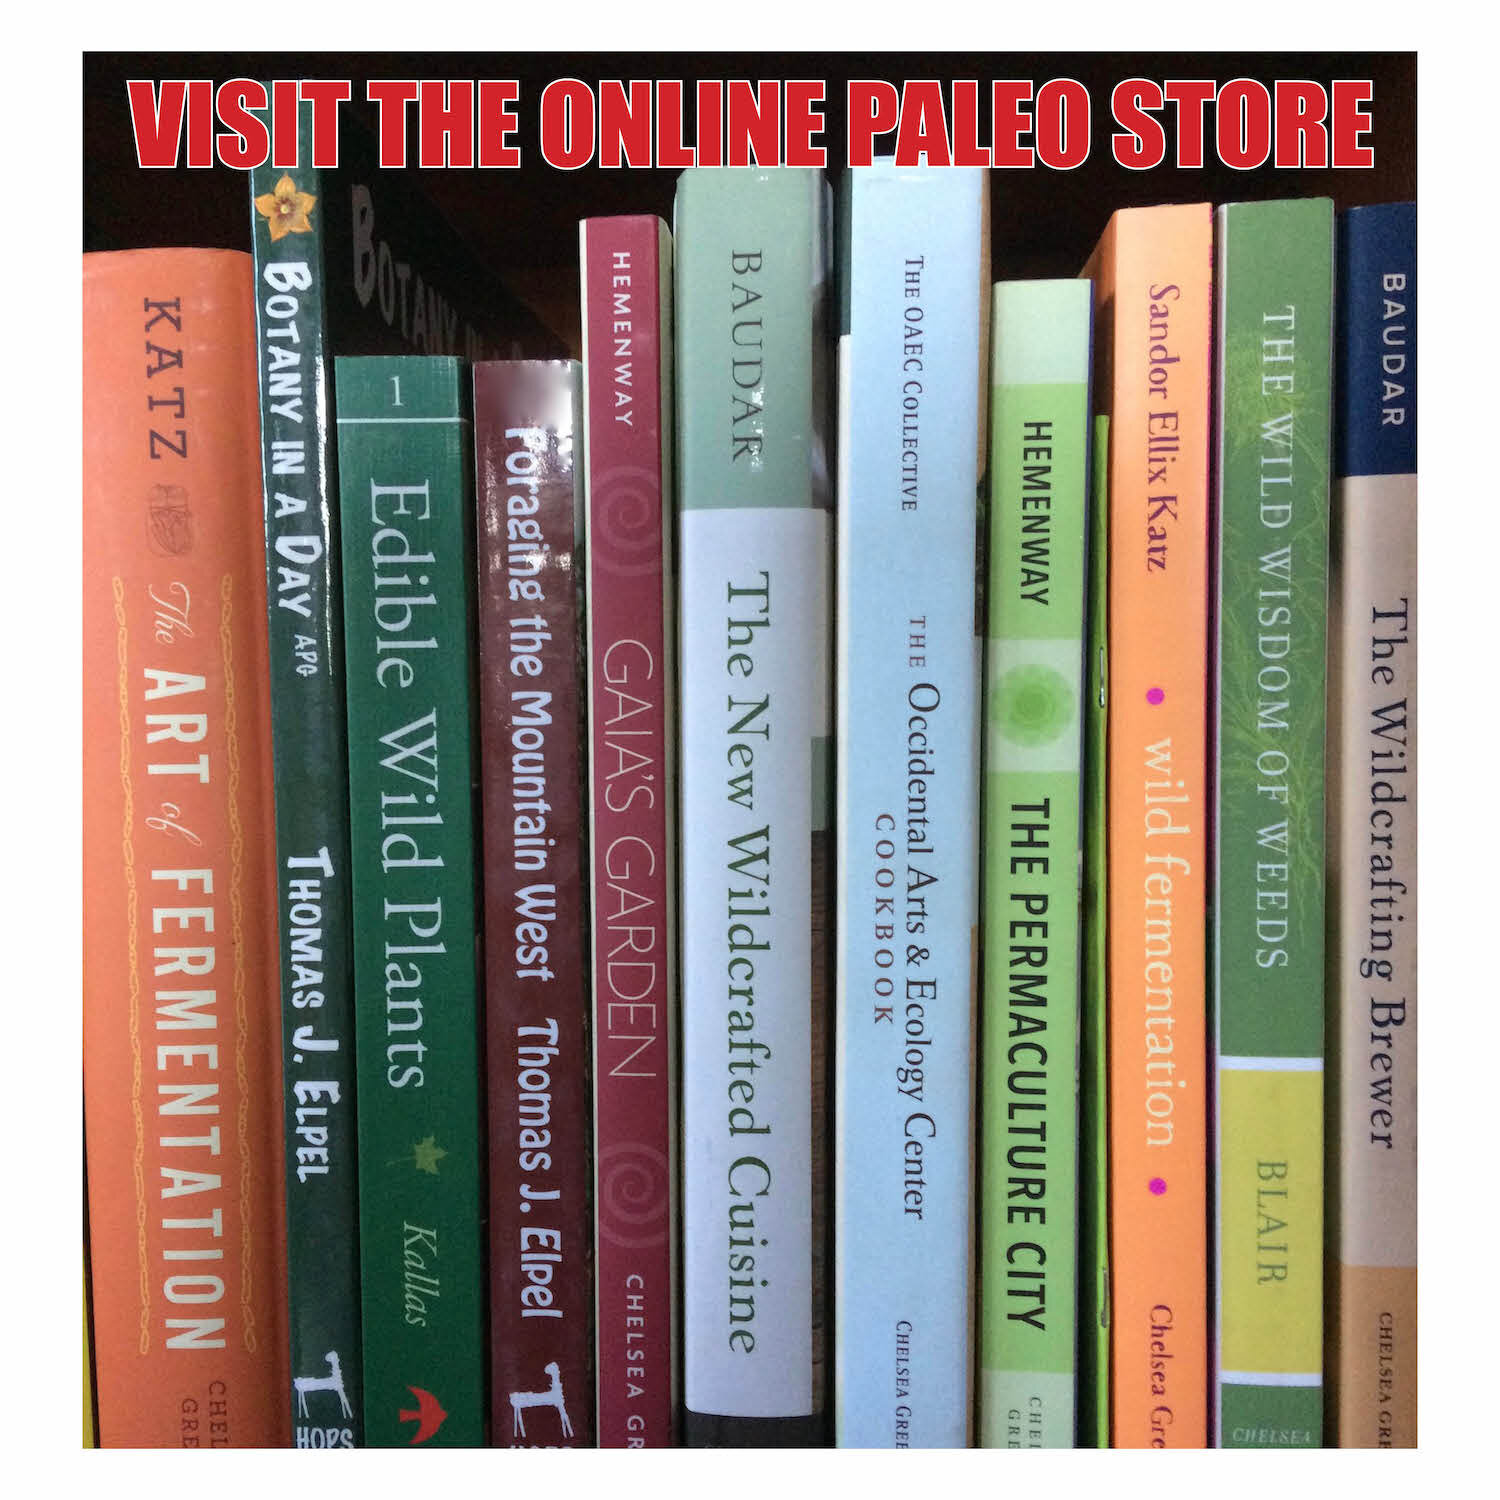 Vist the Online Paleo Store